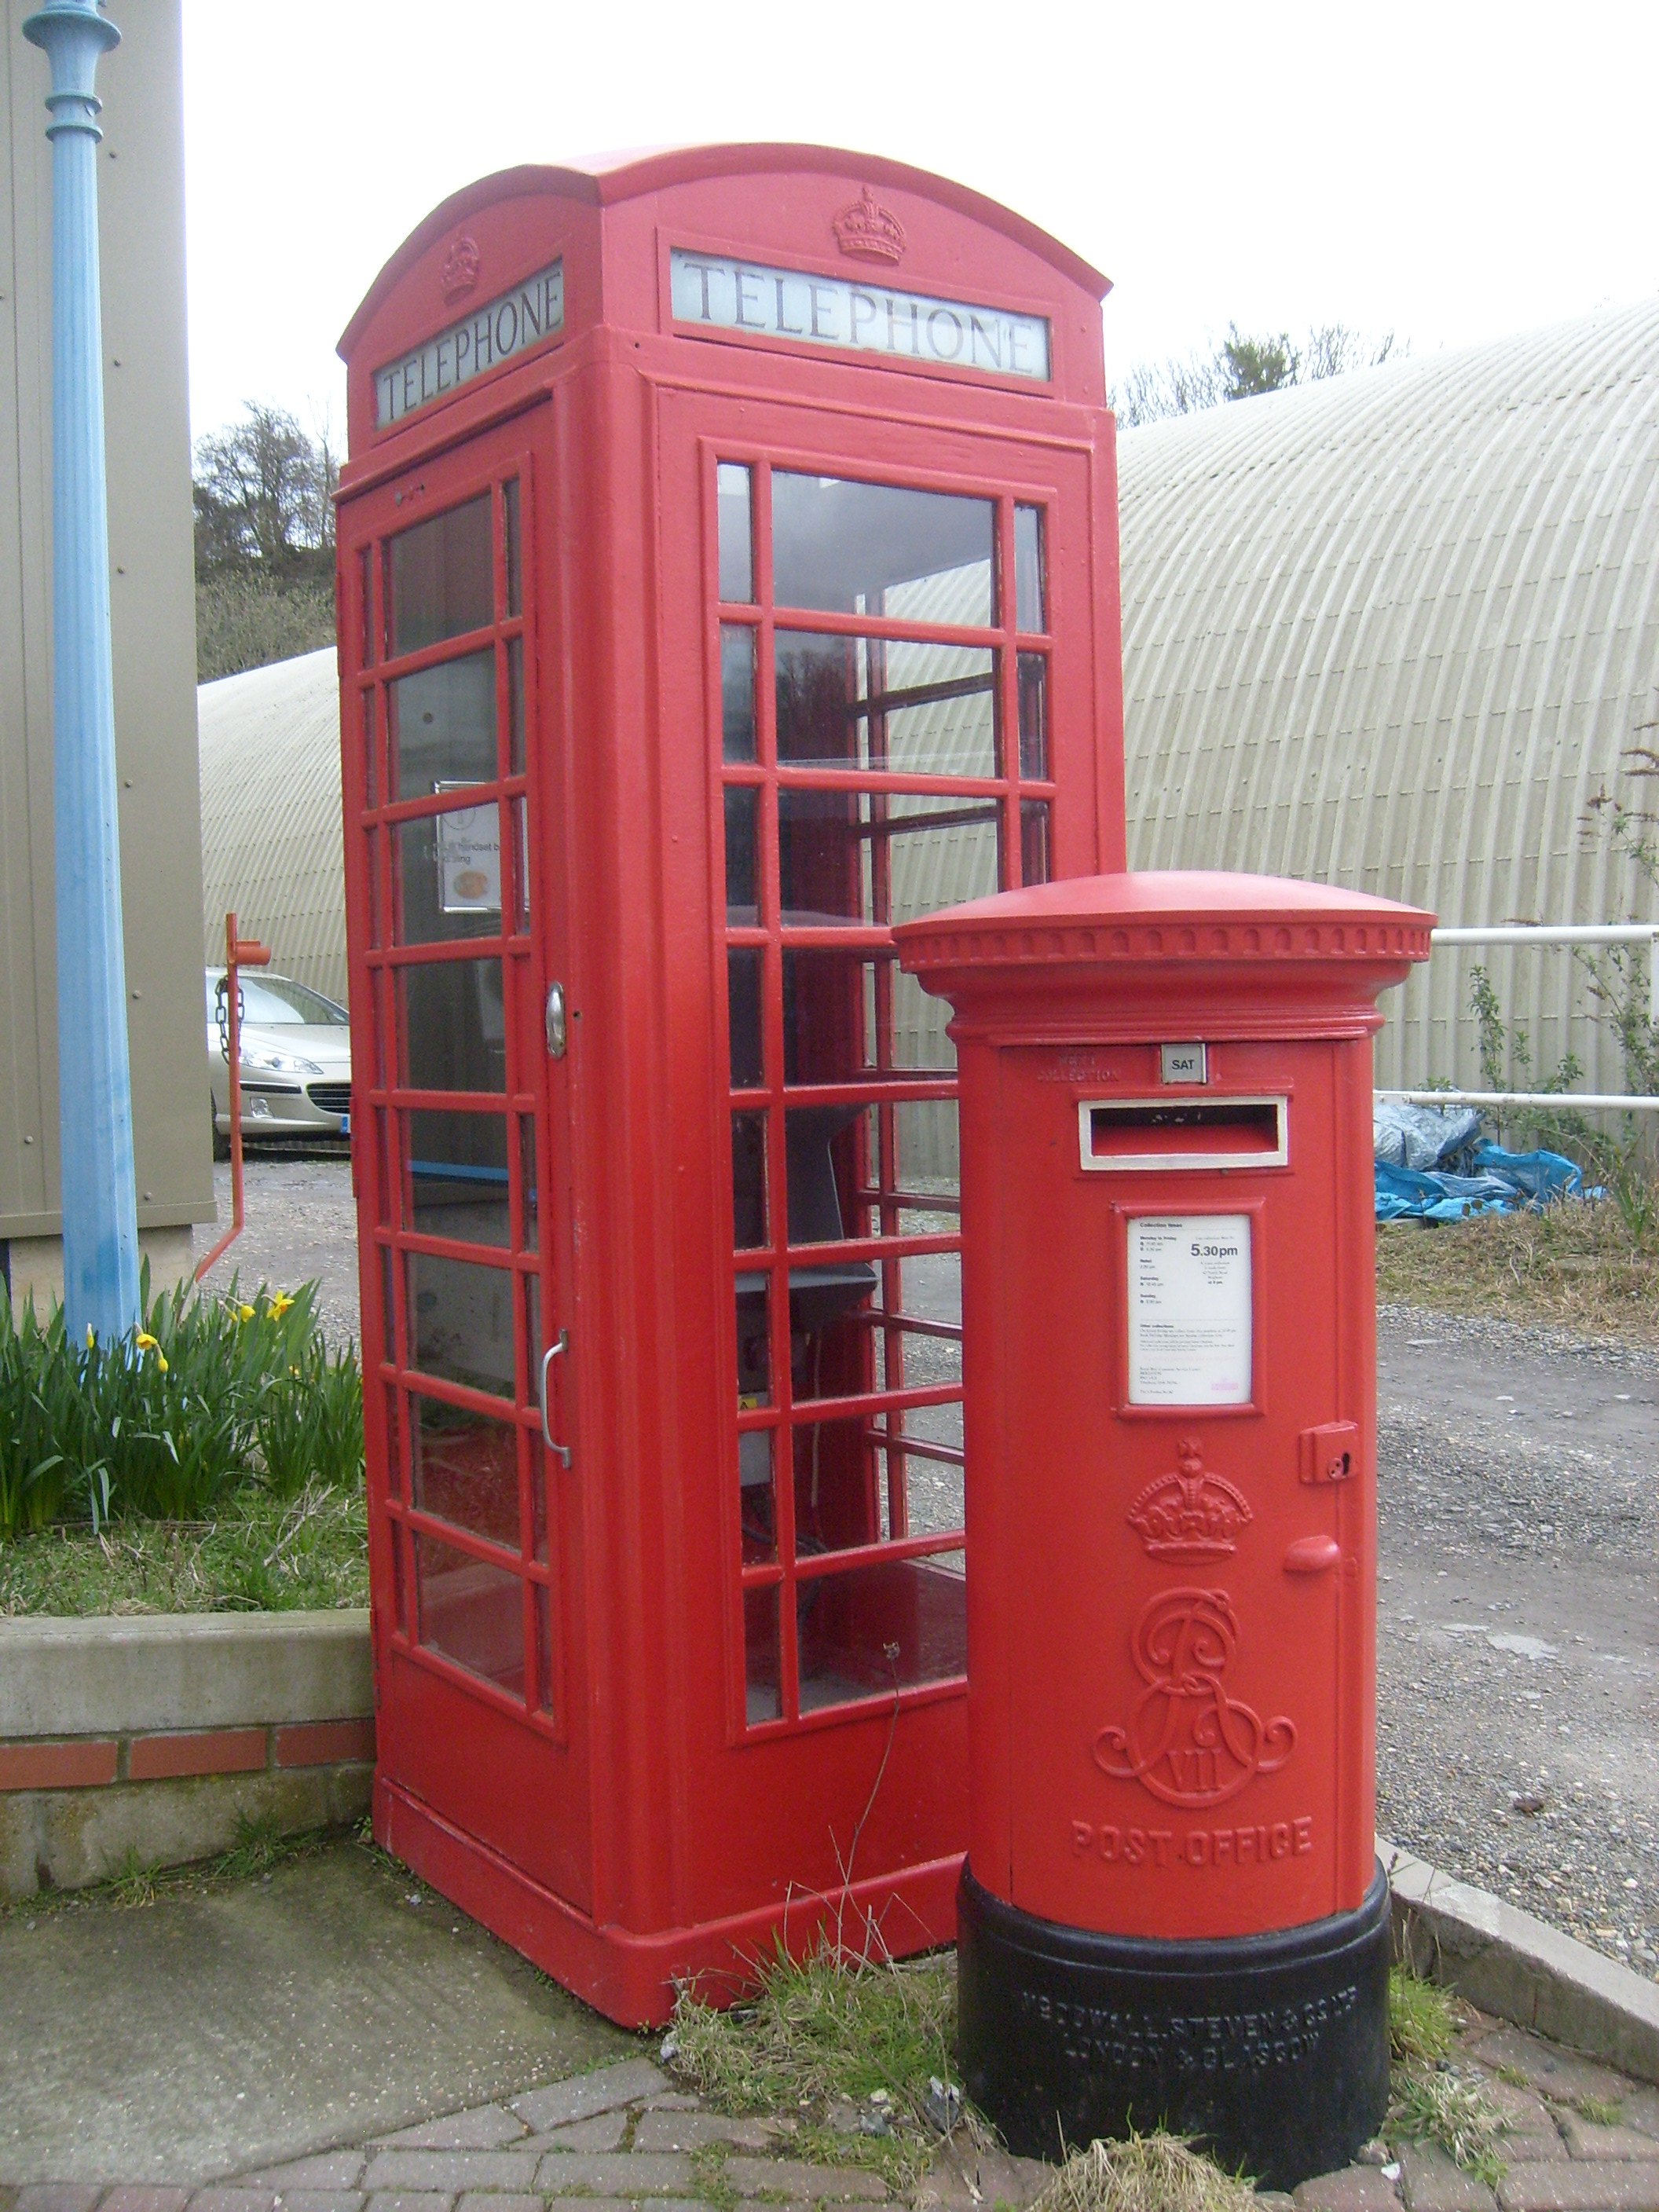 phone booth, English Telephone Booth - desktop wallpaper